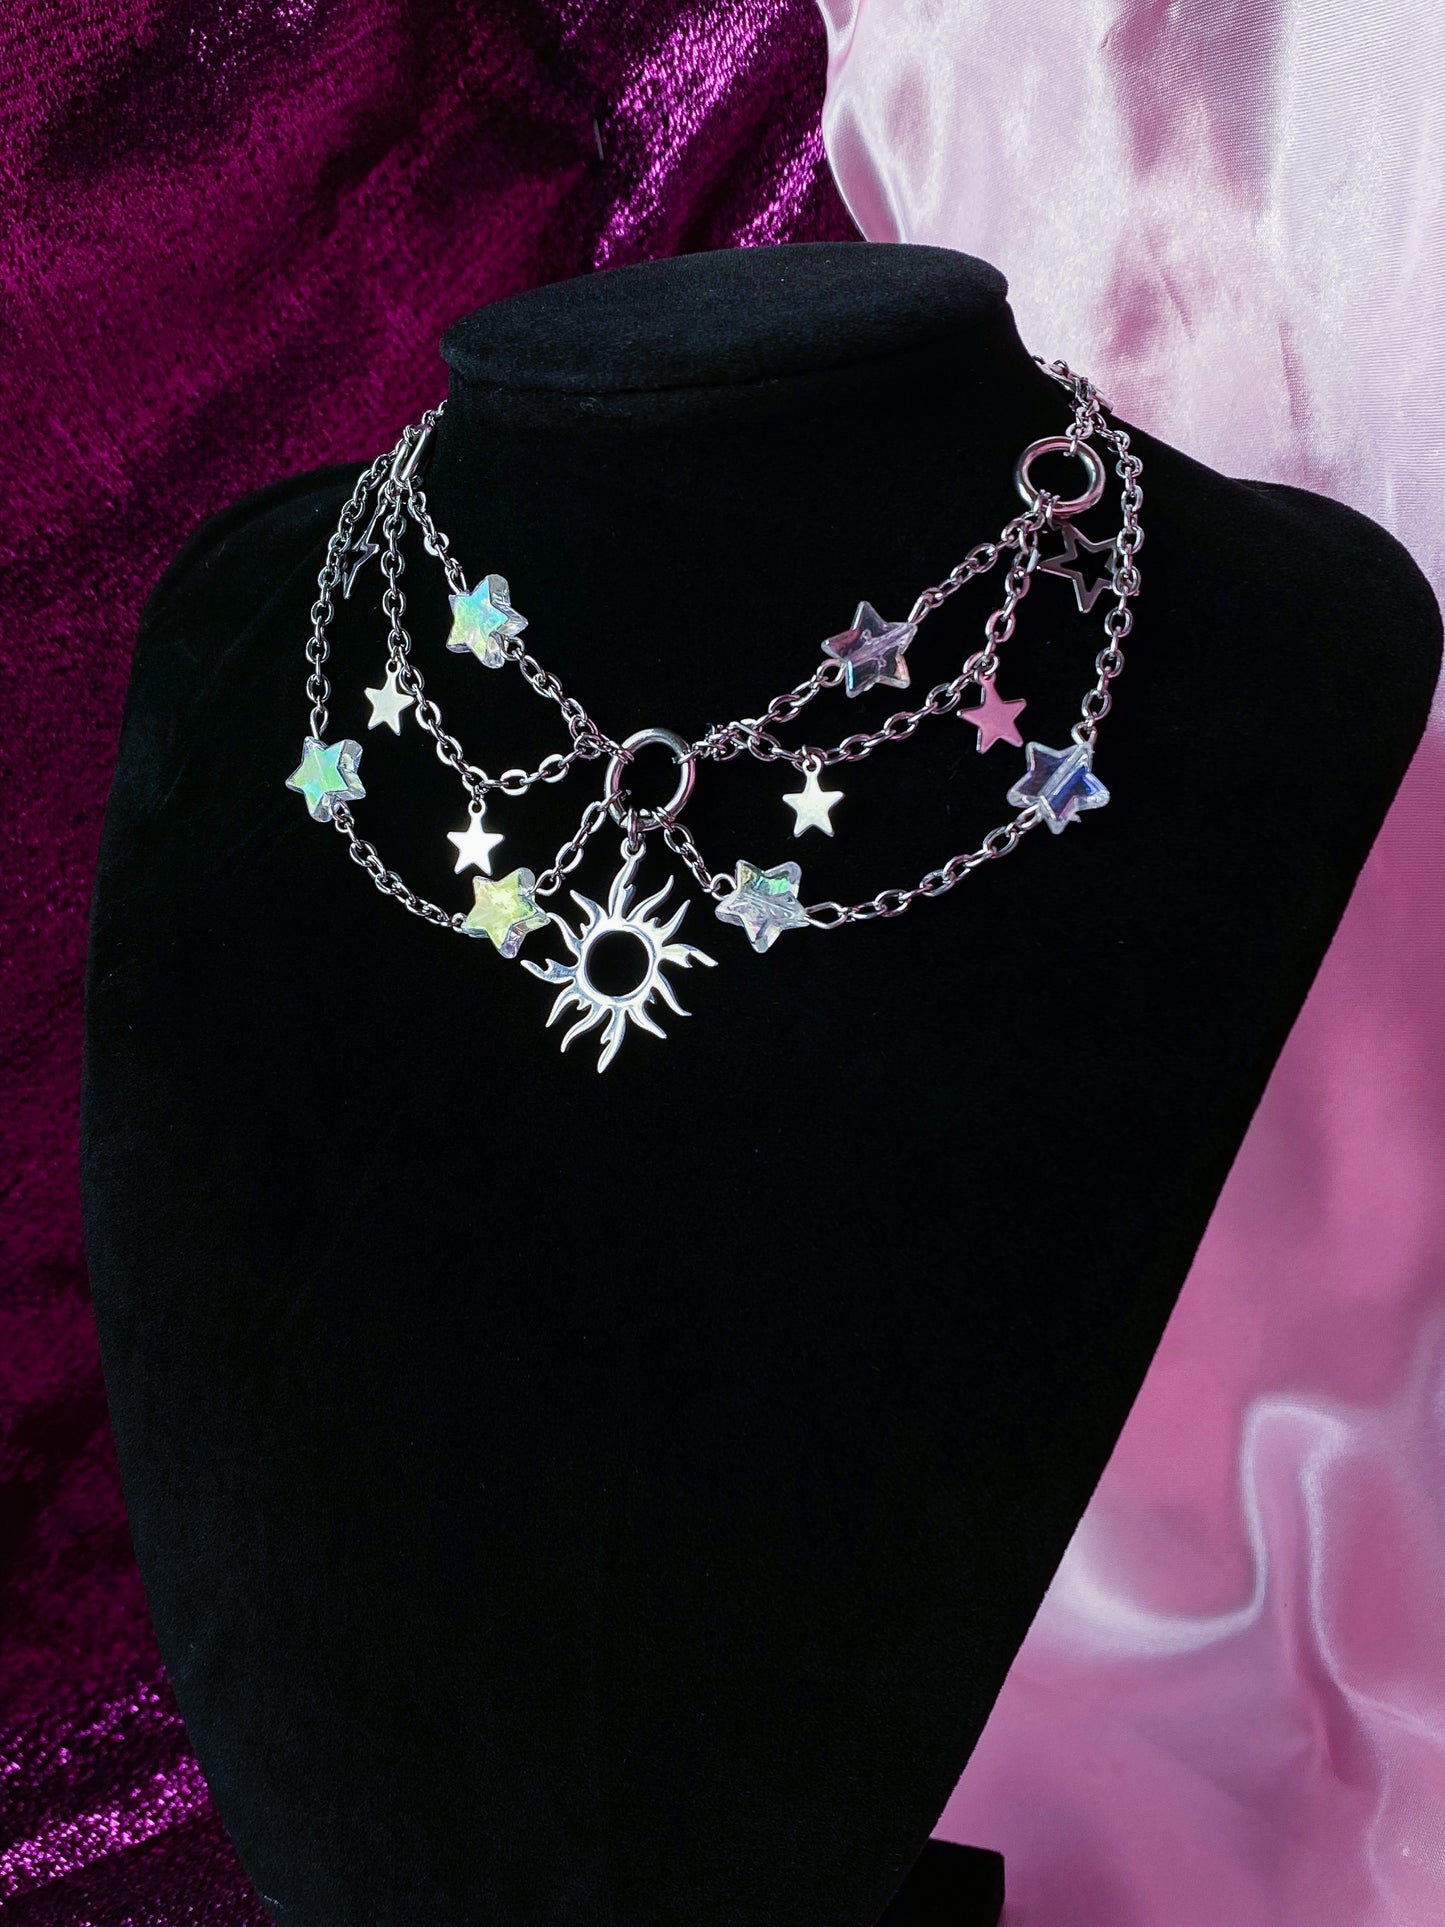 Sun and star celestial whimisgoth handmade necklace